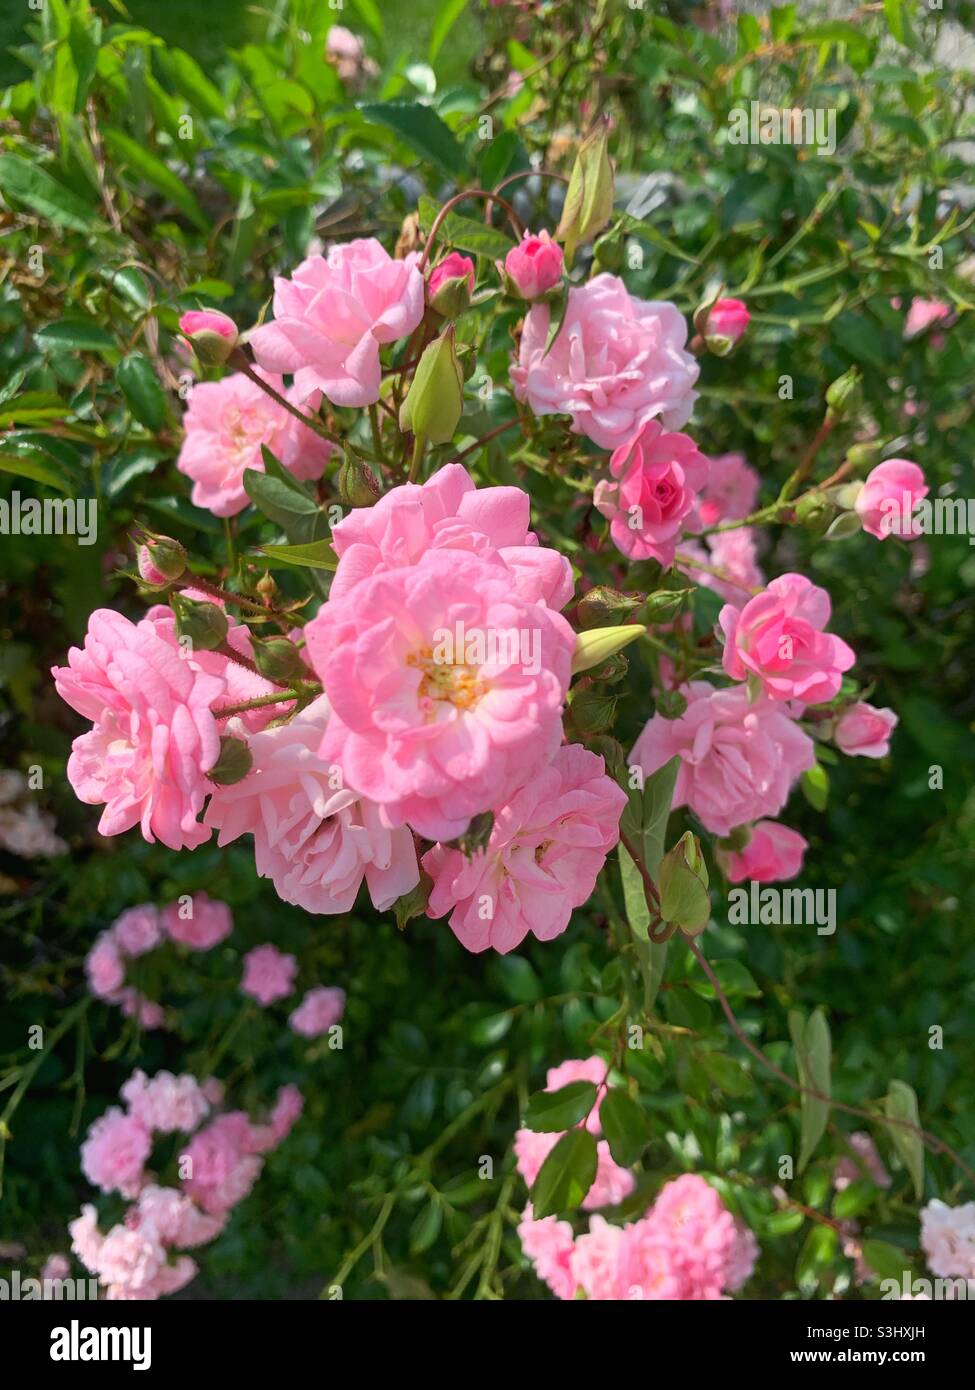 Beautiful pink flowers growing in the backyard flower garden. Stock Photo